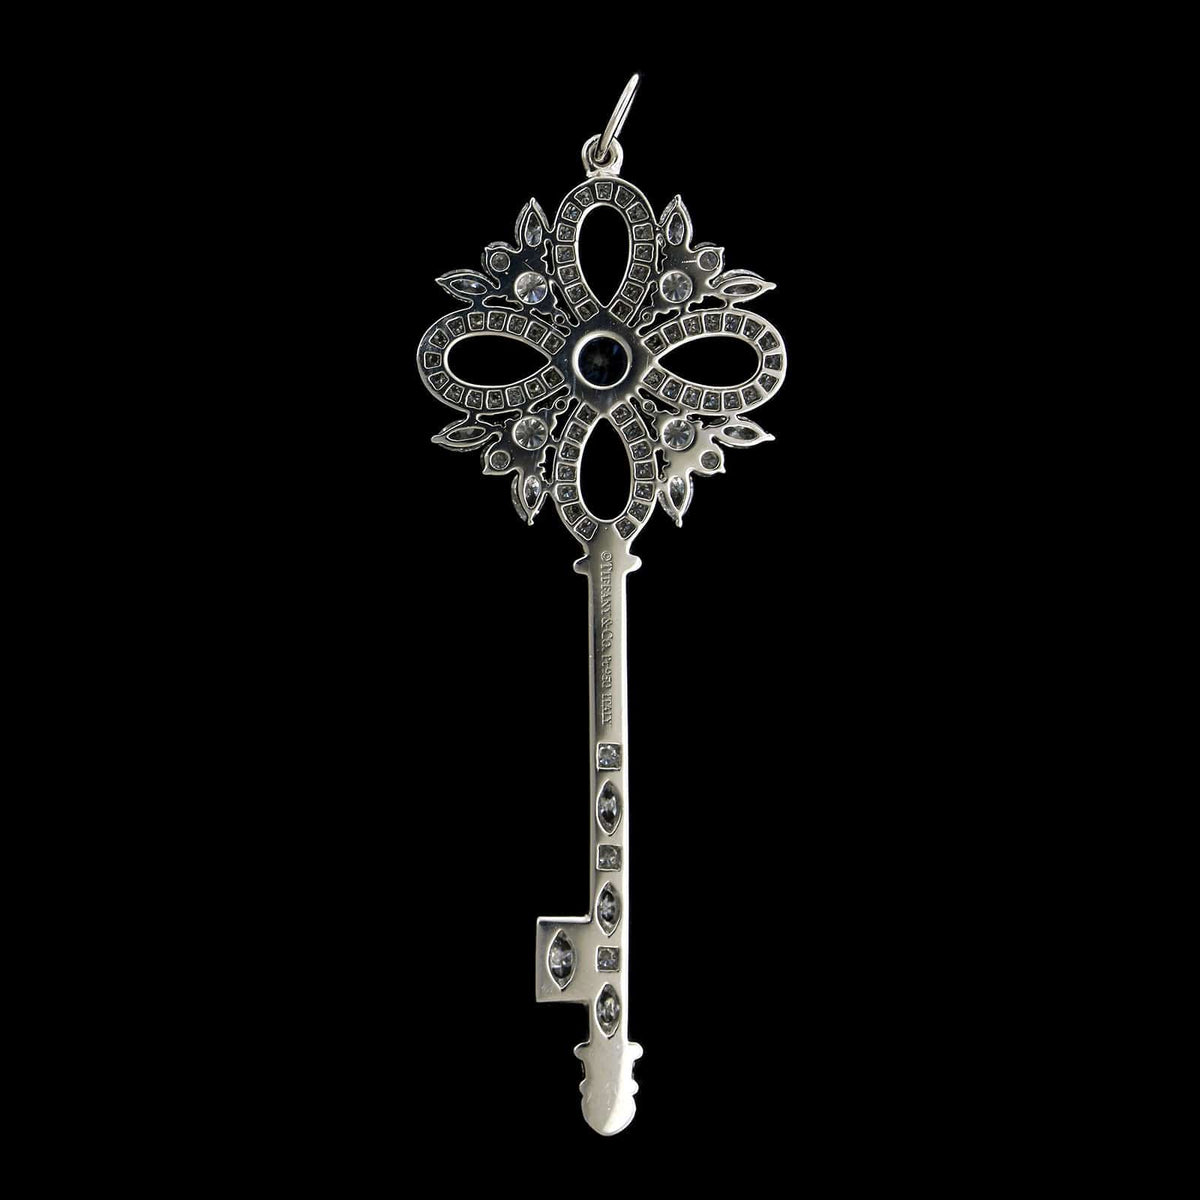 Lockit Key pendant, white gold and diamonds - Categories Q93004